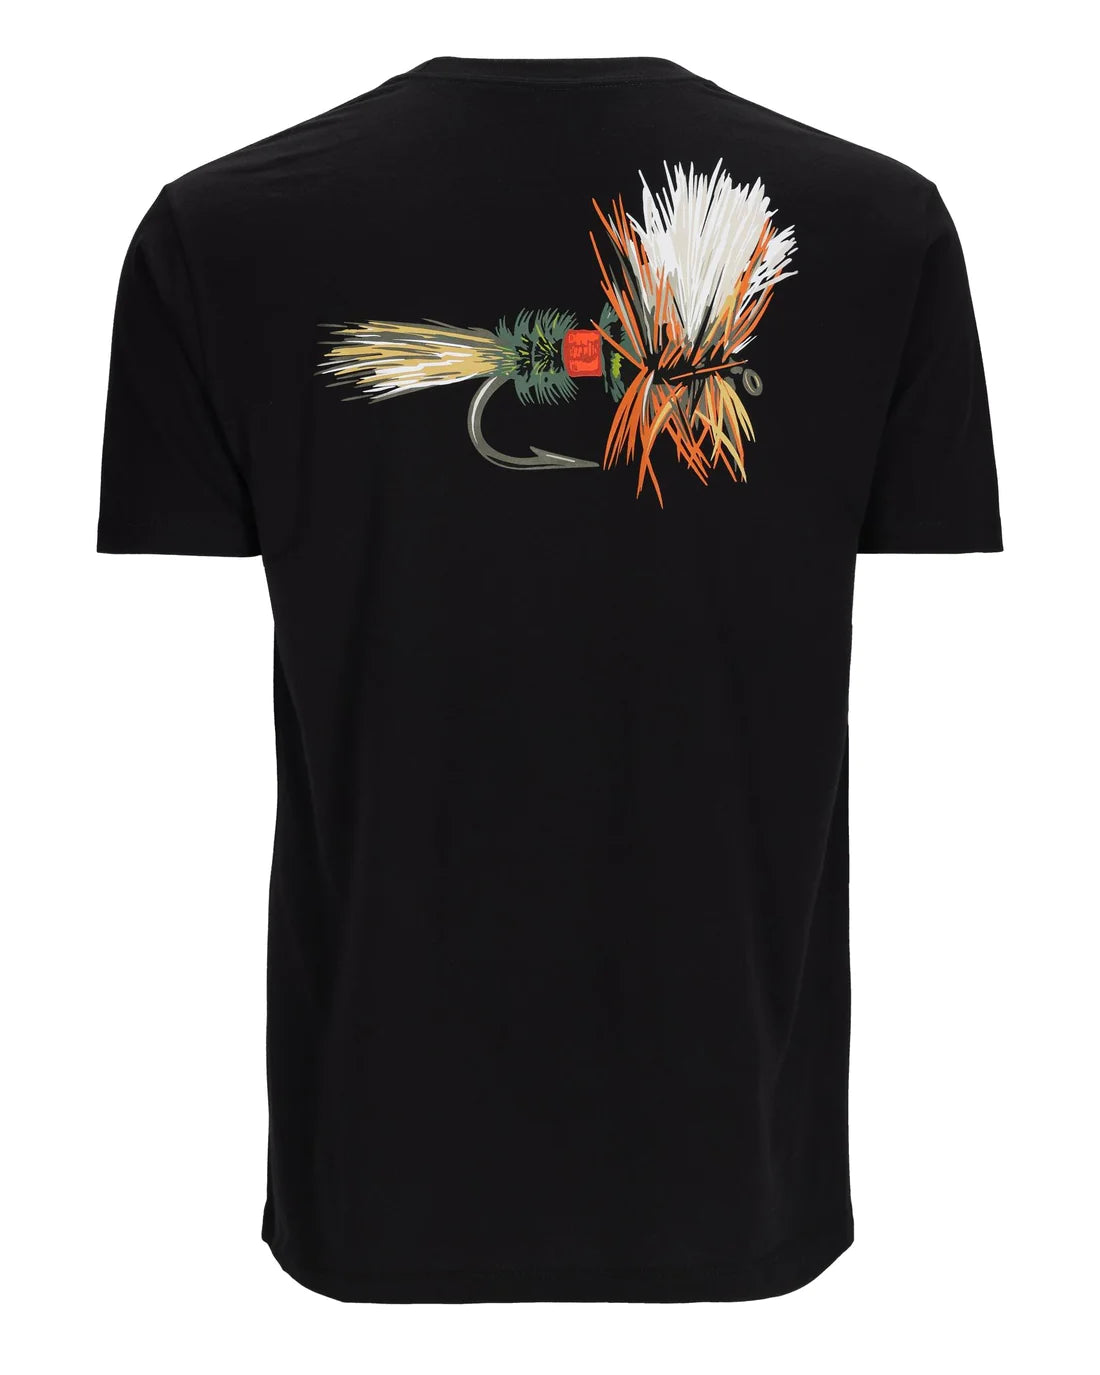 Simms Royal Wulff Fly T-Shirt Black / Large